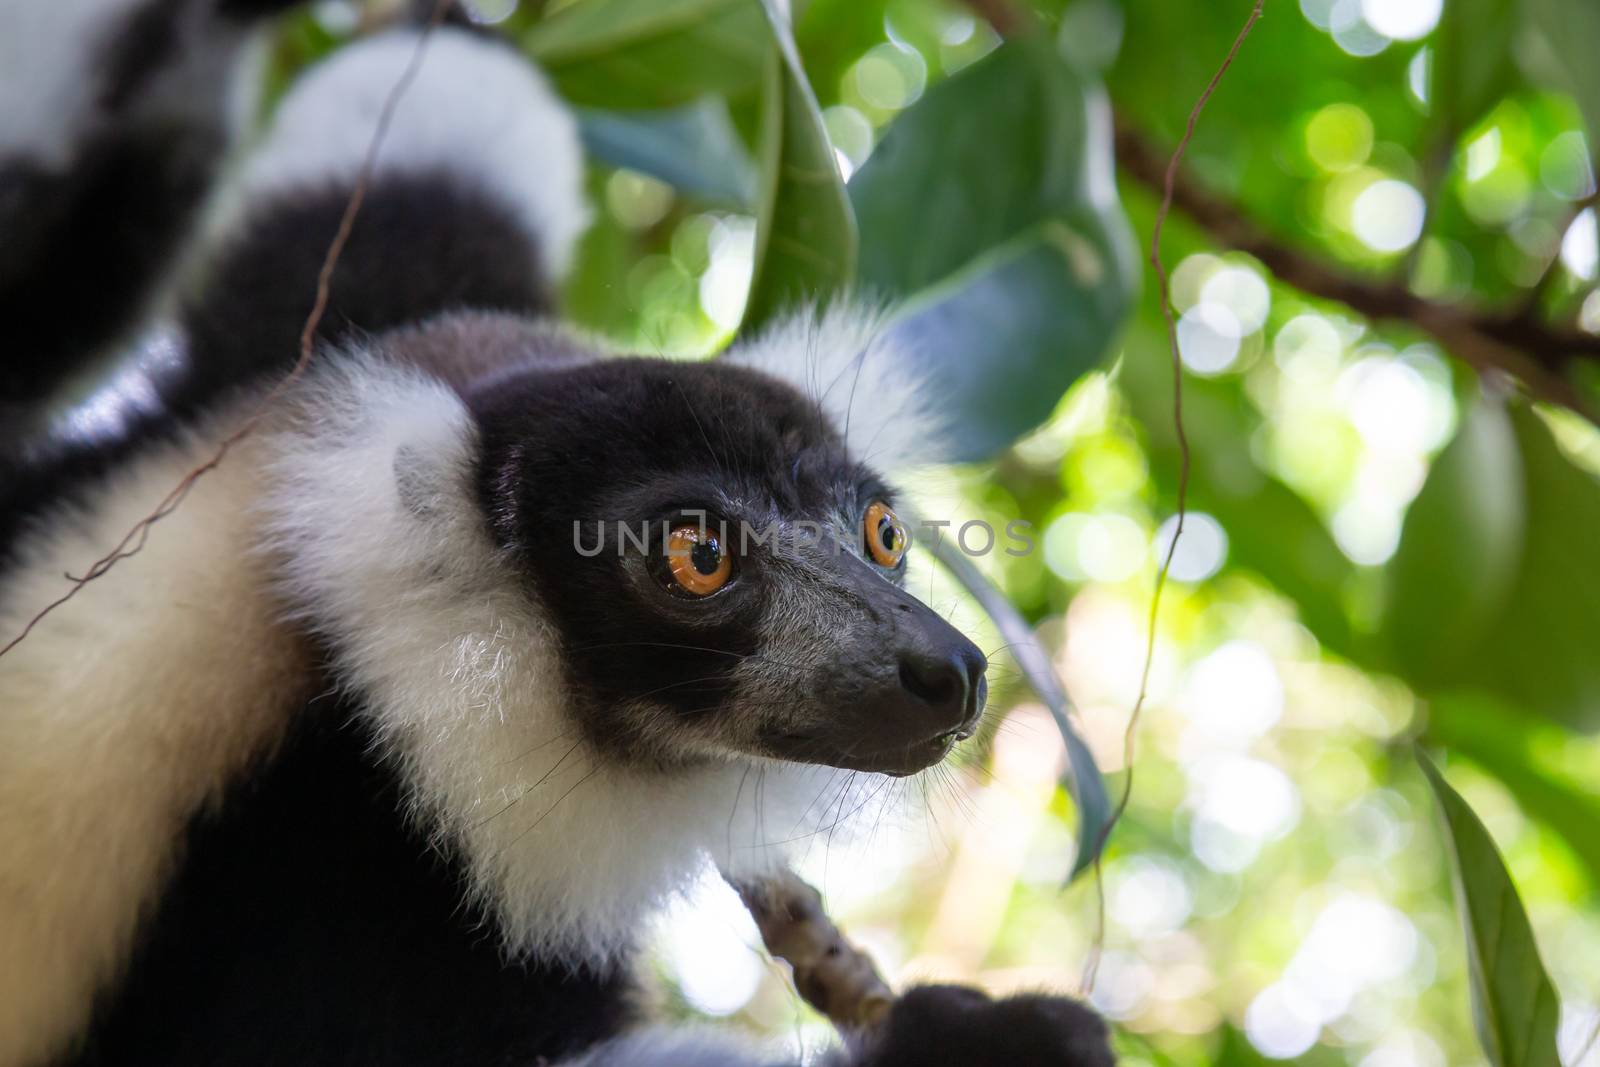 The portrait of a black and white Vari Lemur